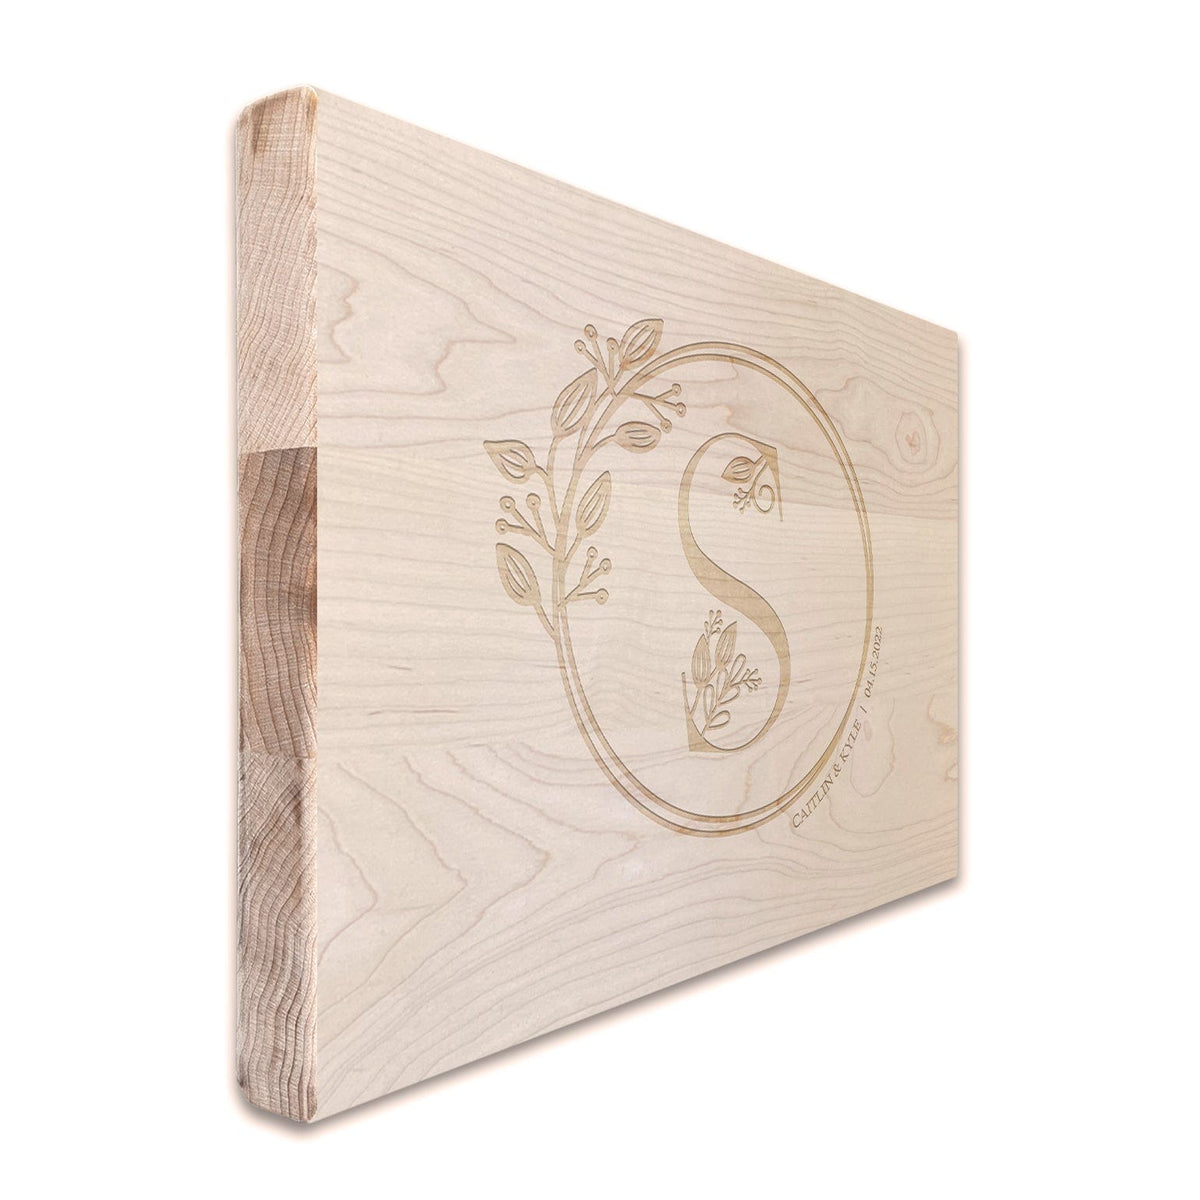 Personalized wedding gift wood cutting board